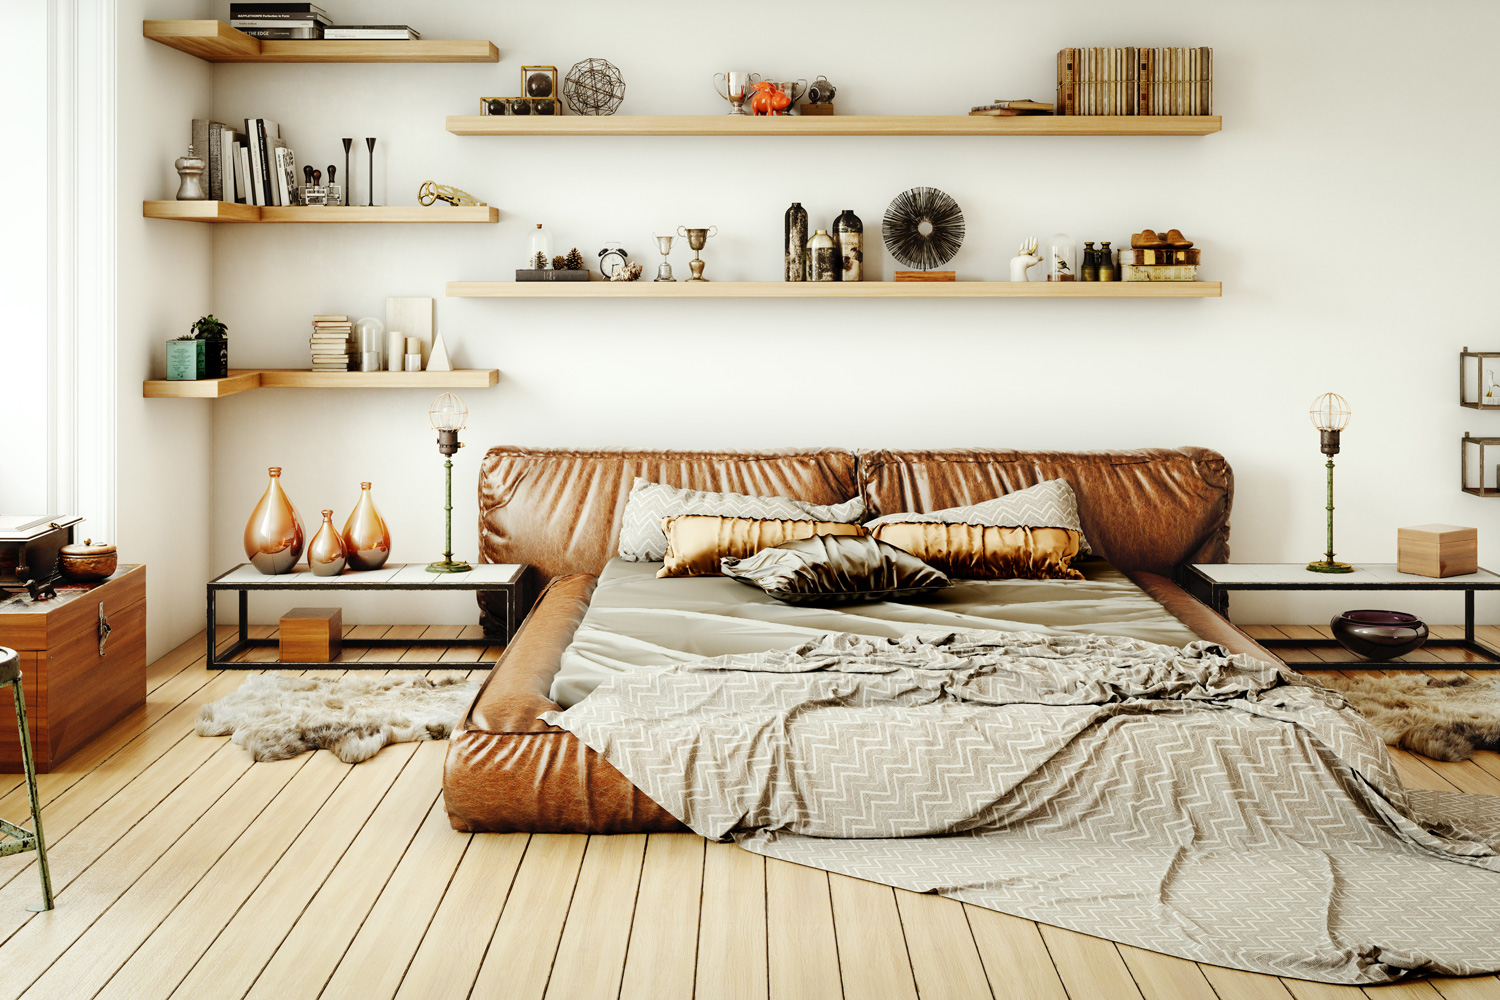 Warm and Cozy Home Interior